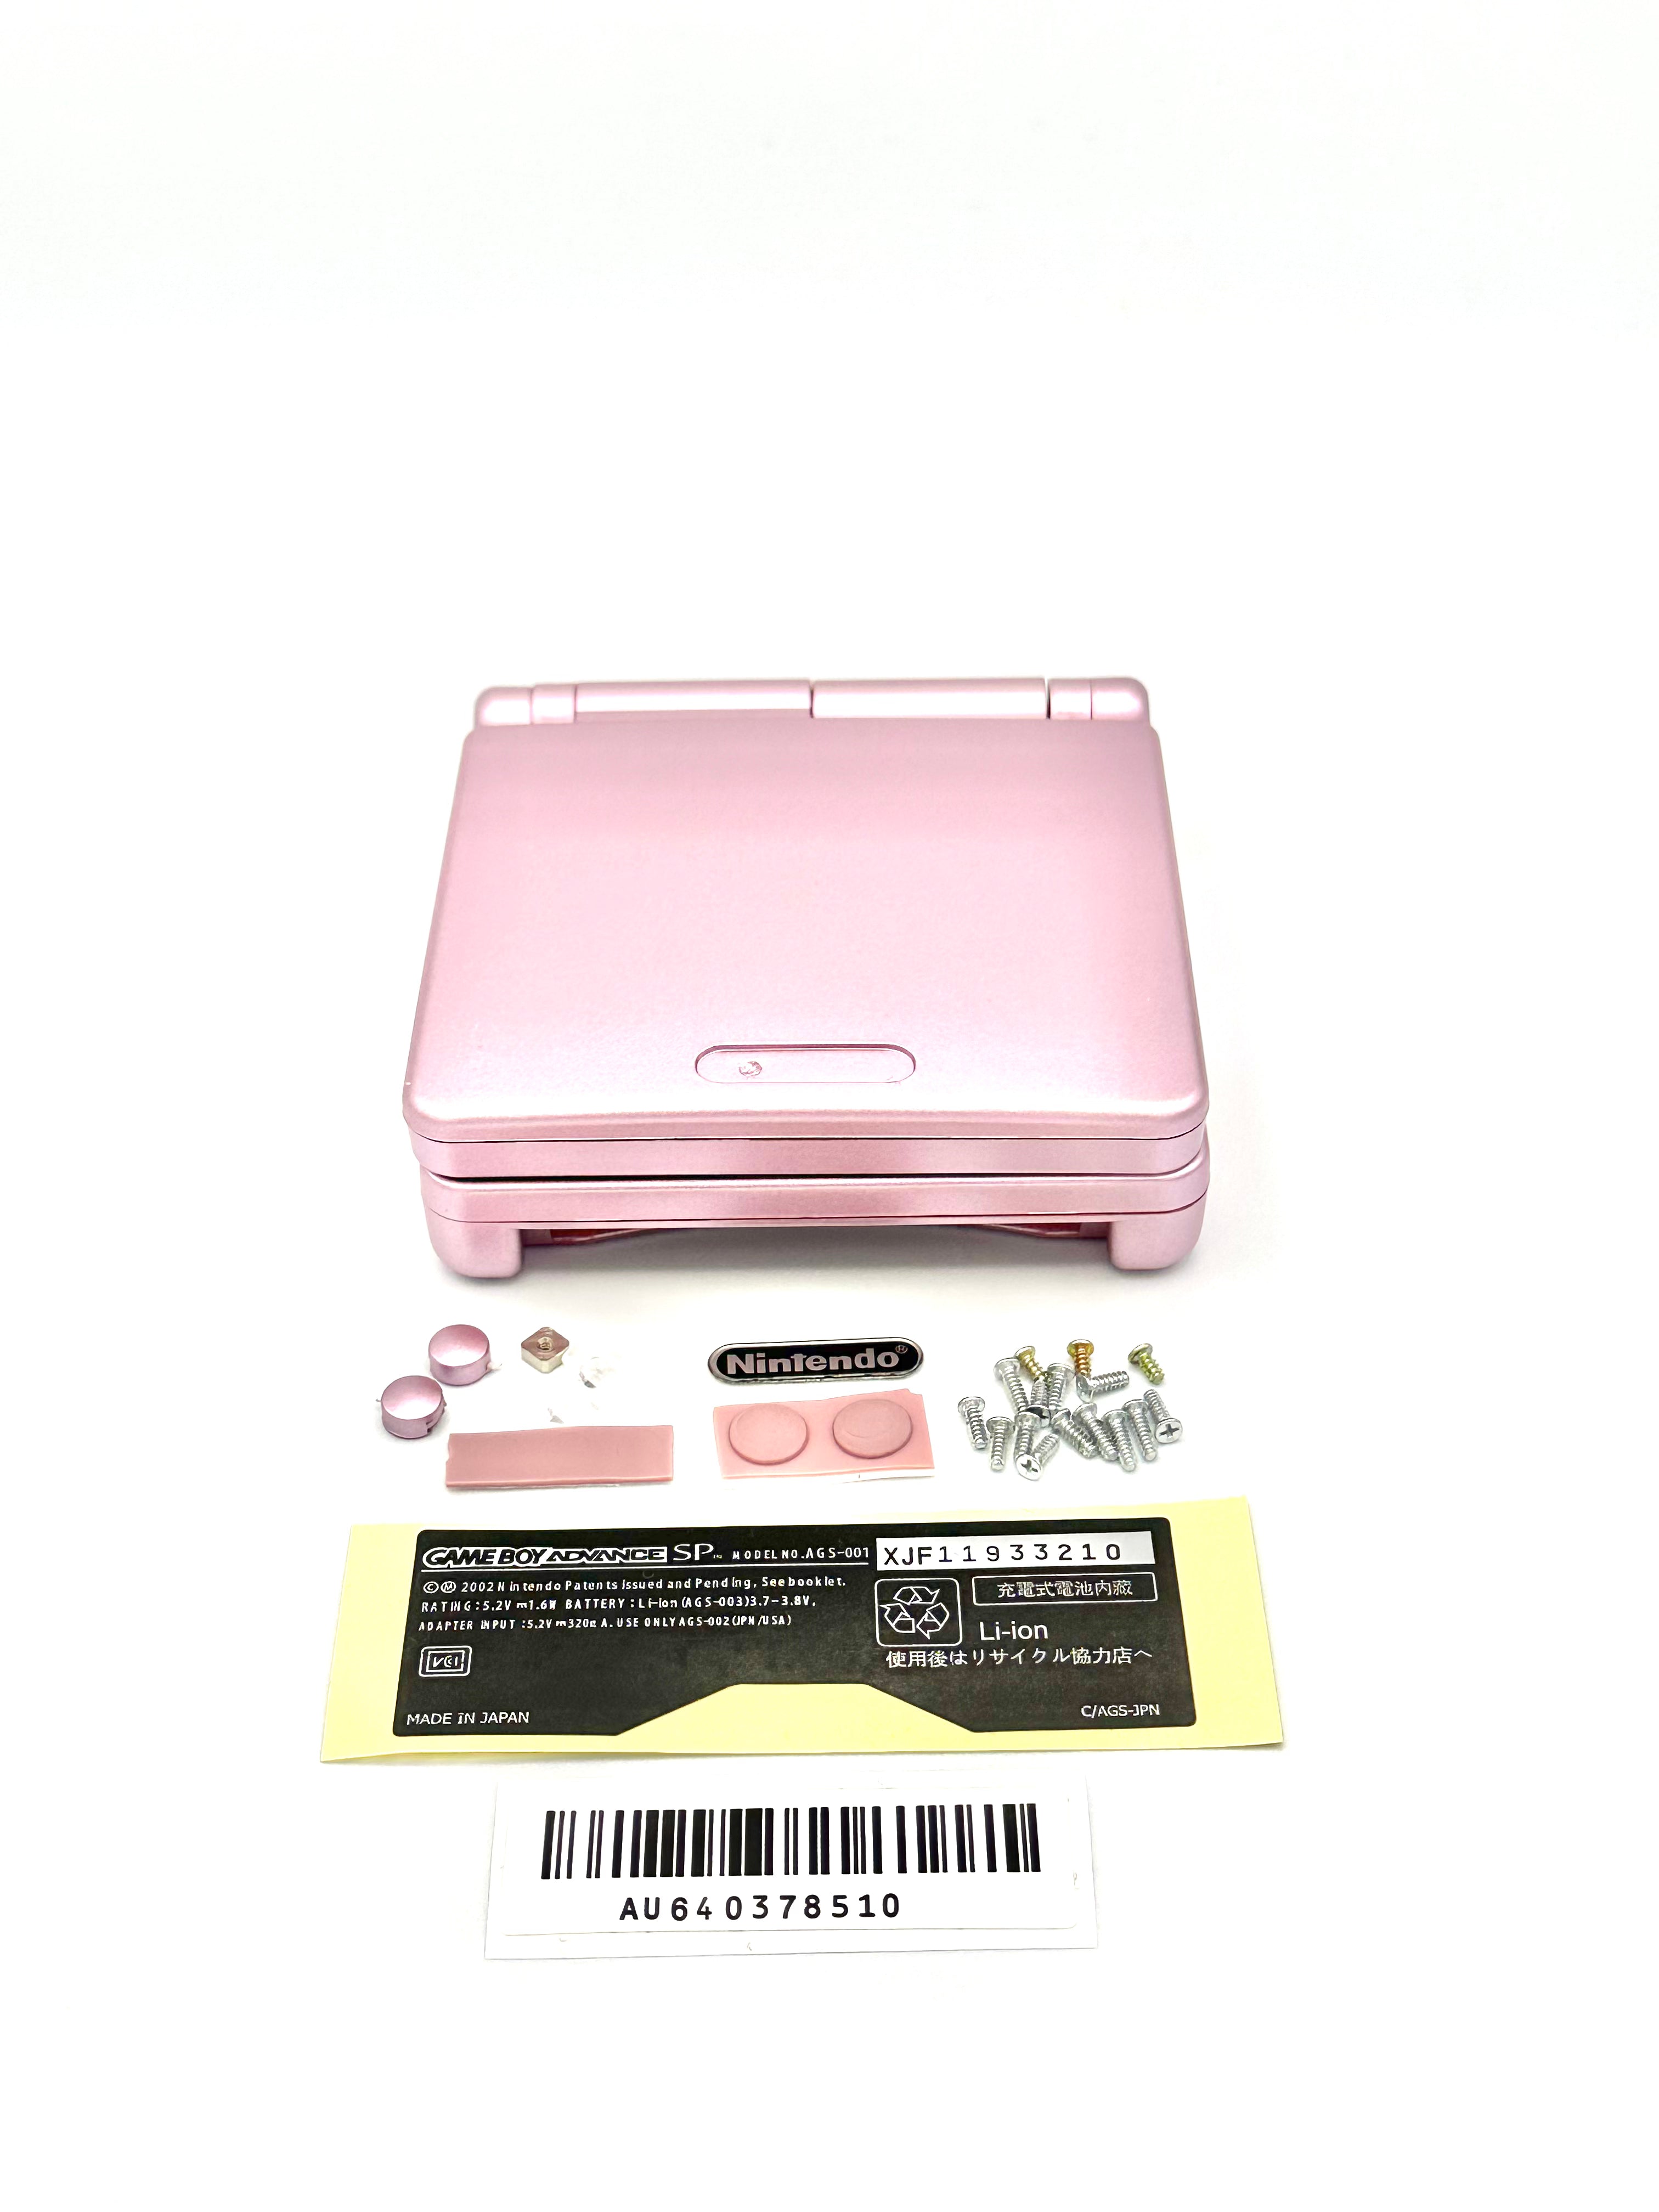 Nintendo Gameboy Advance SP Shell Pink